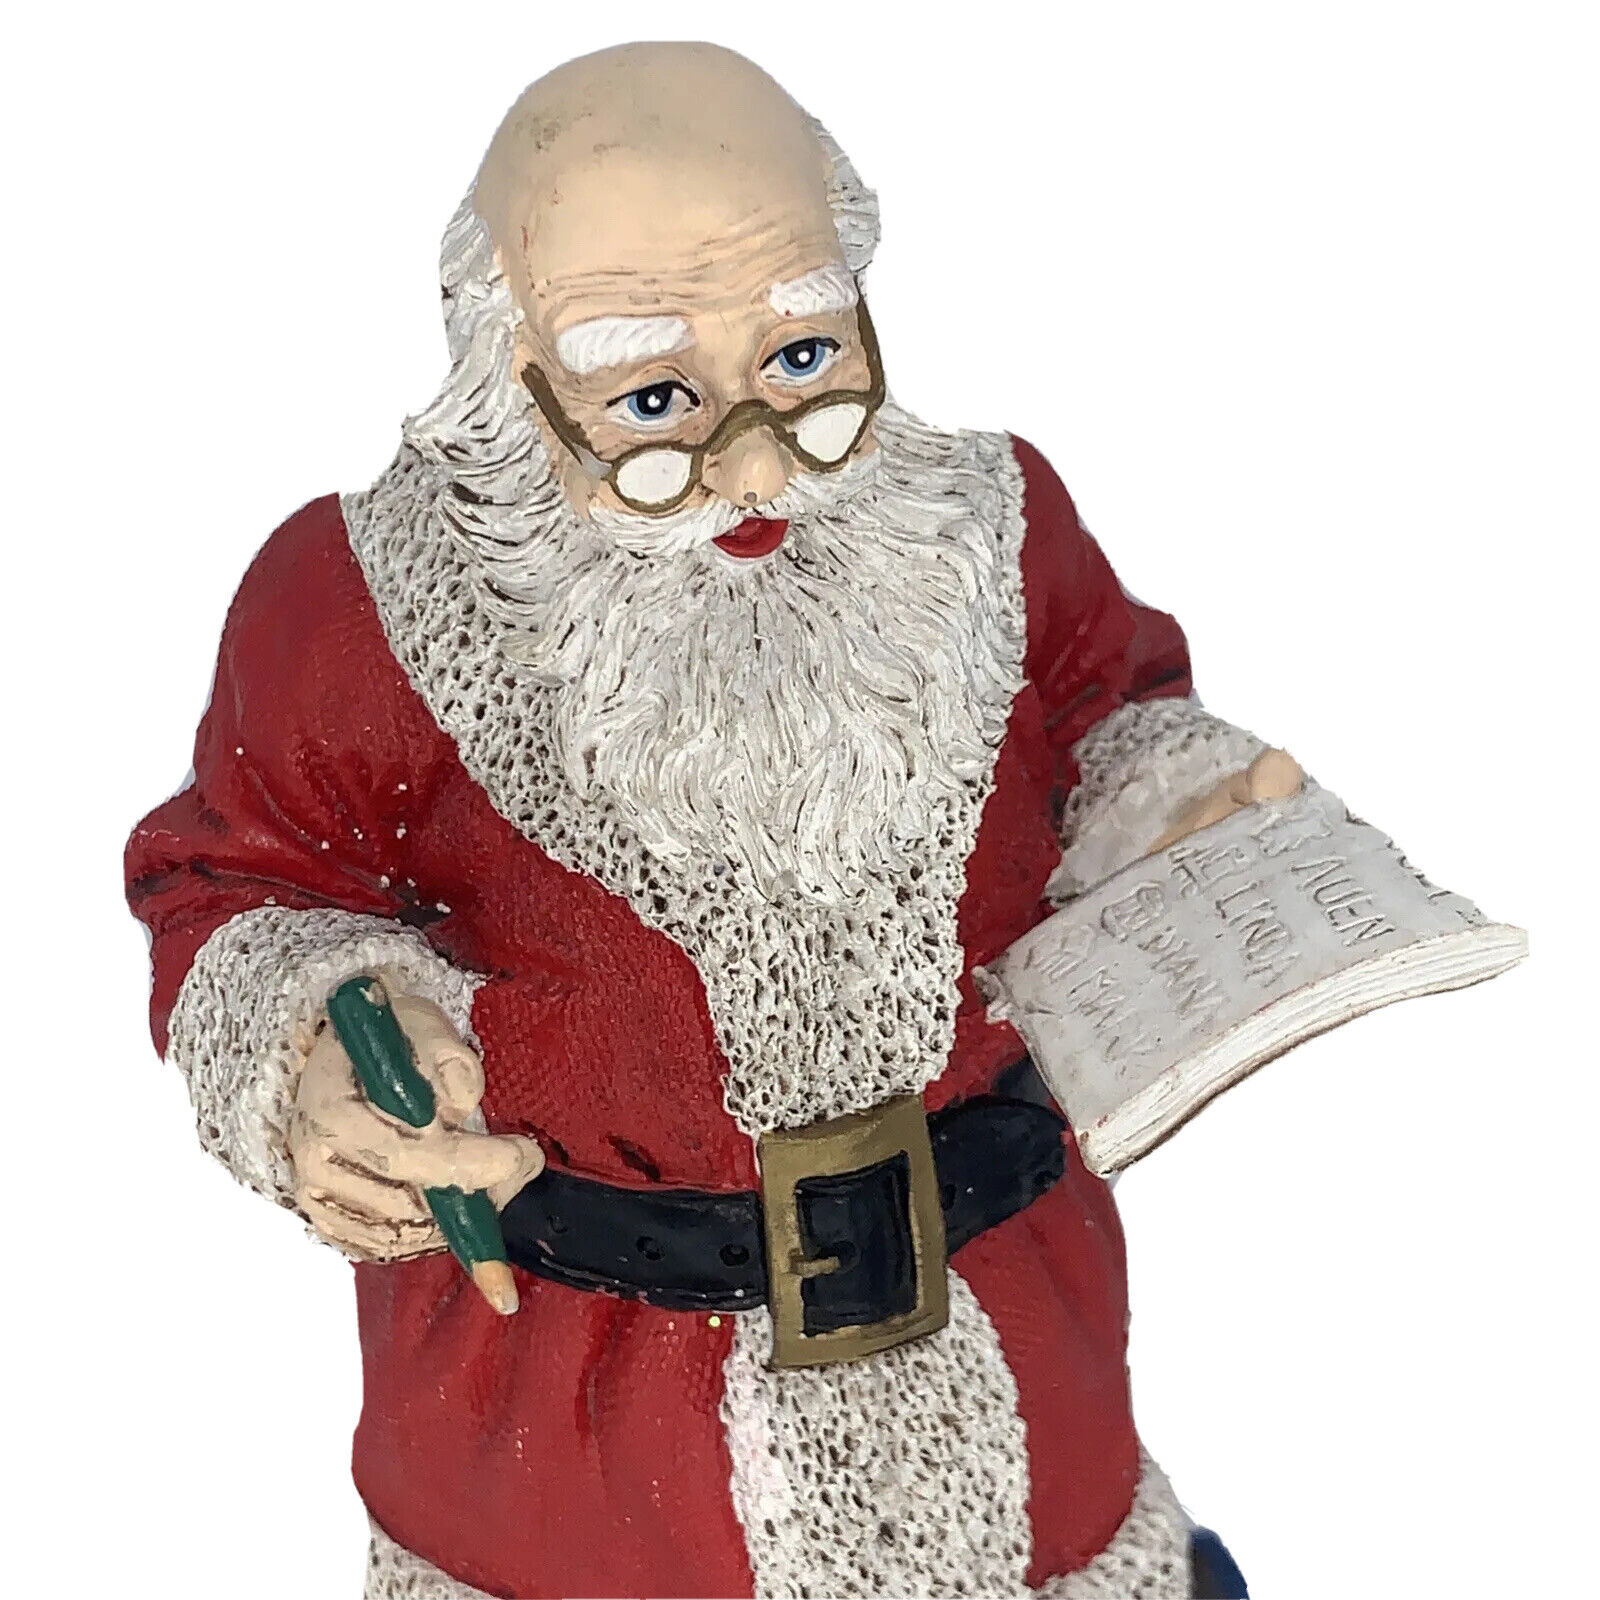 Santa Figure Gifts￼ Presents Toys Presents Train Clown Drum Checking His List